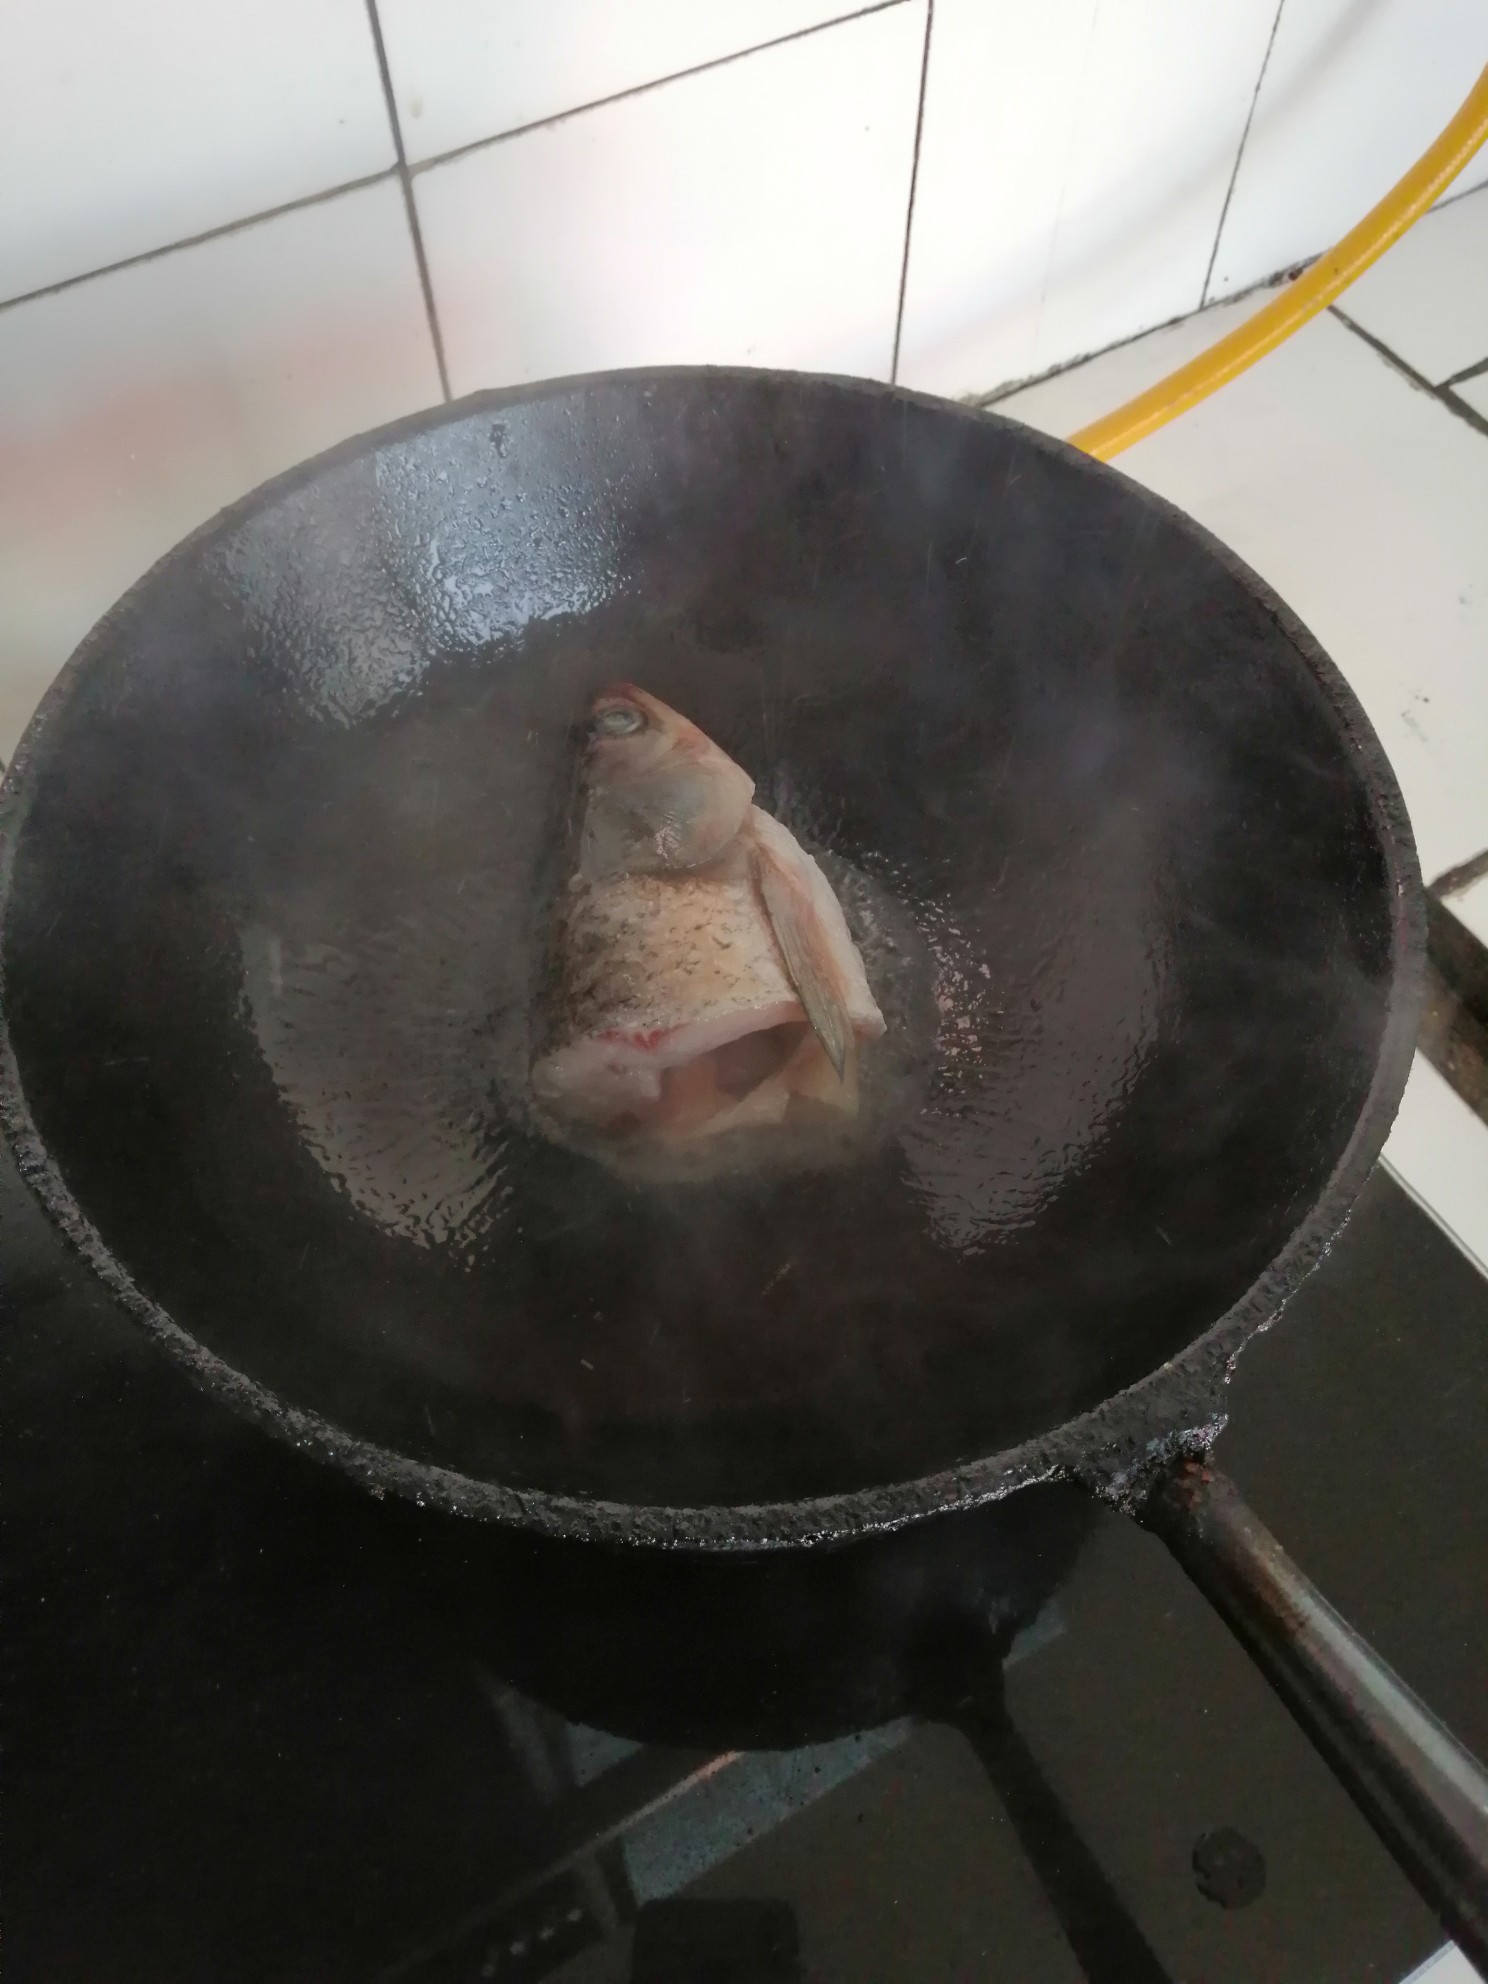 Stewed Fish Head Soup recipe